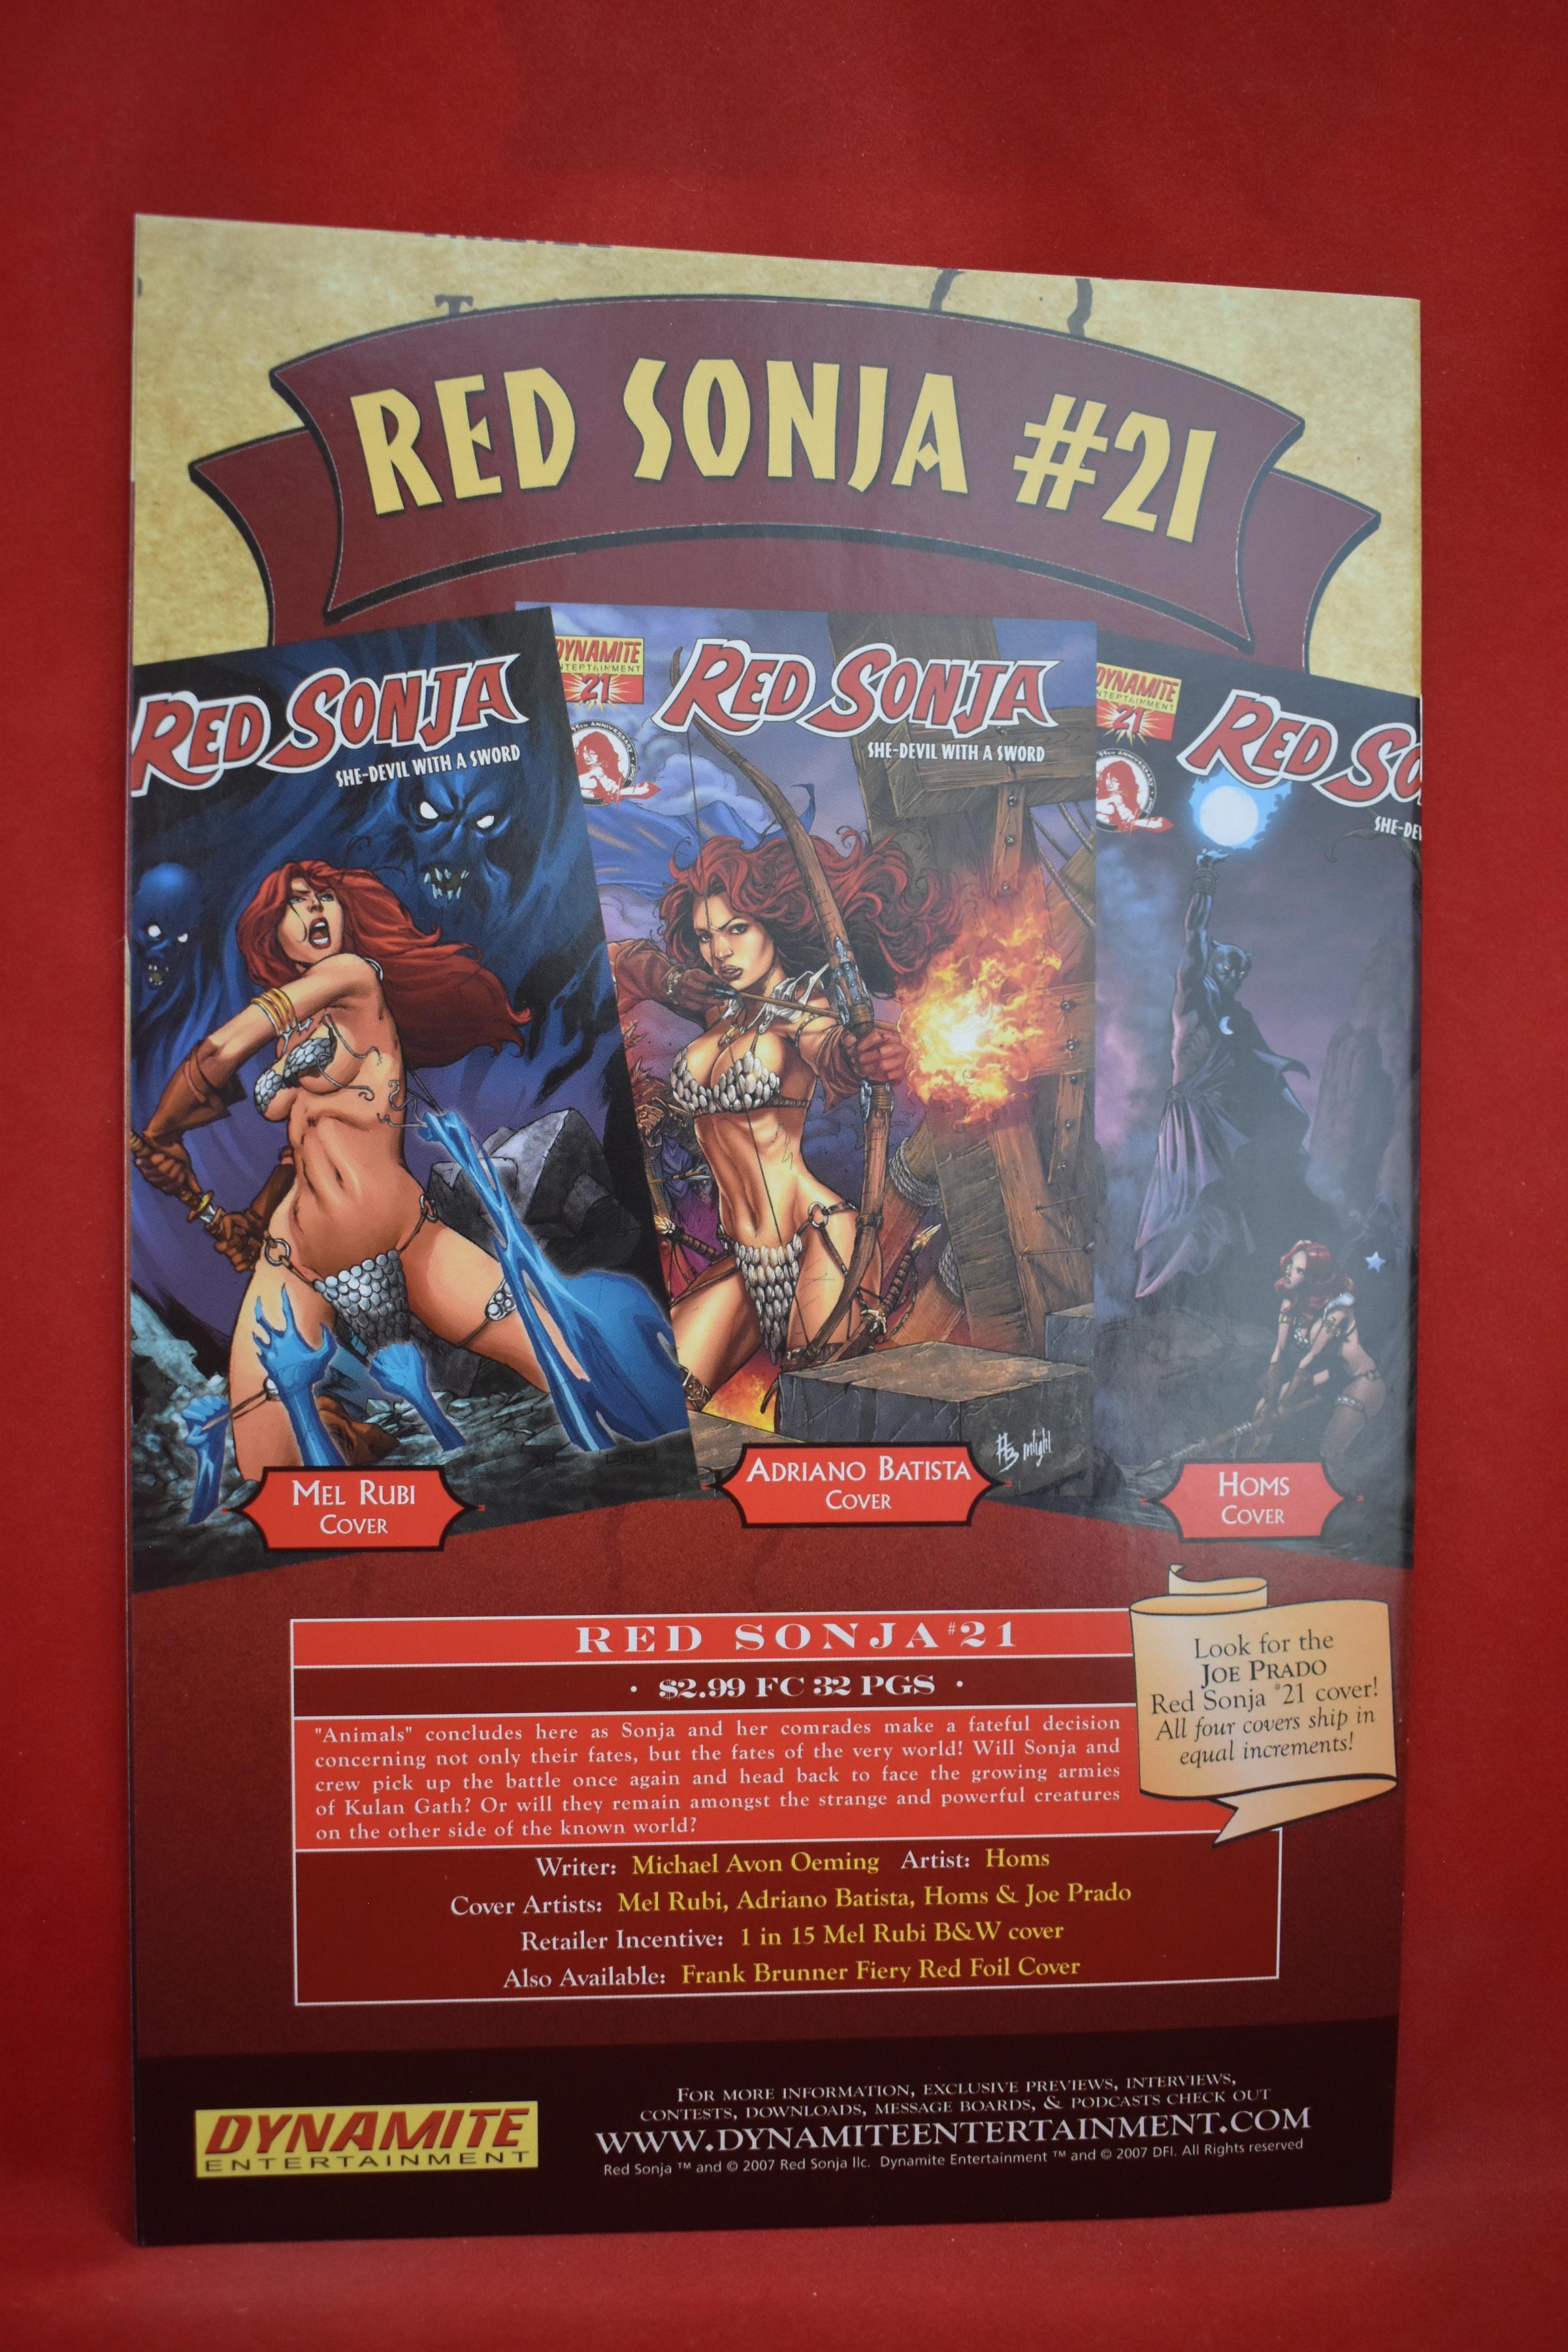 RED SONJA #20 | SHE-DEVIL WITH A SWORD | JONATHAN LUNA VARIANT